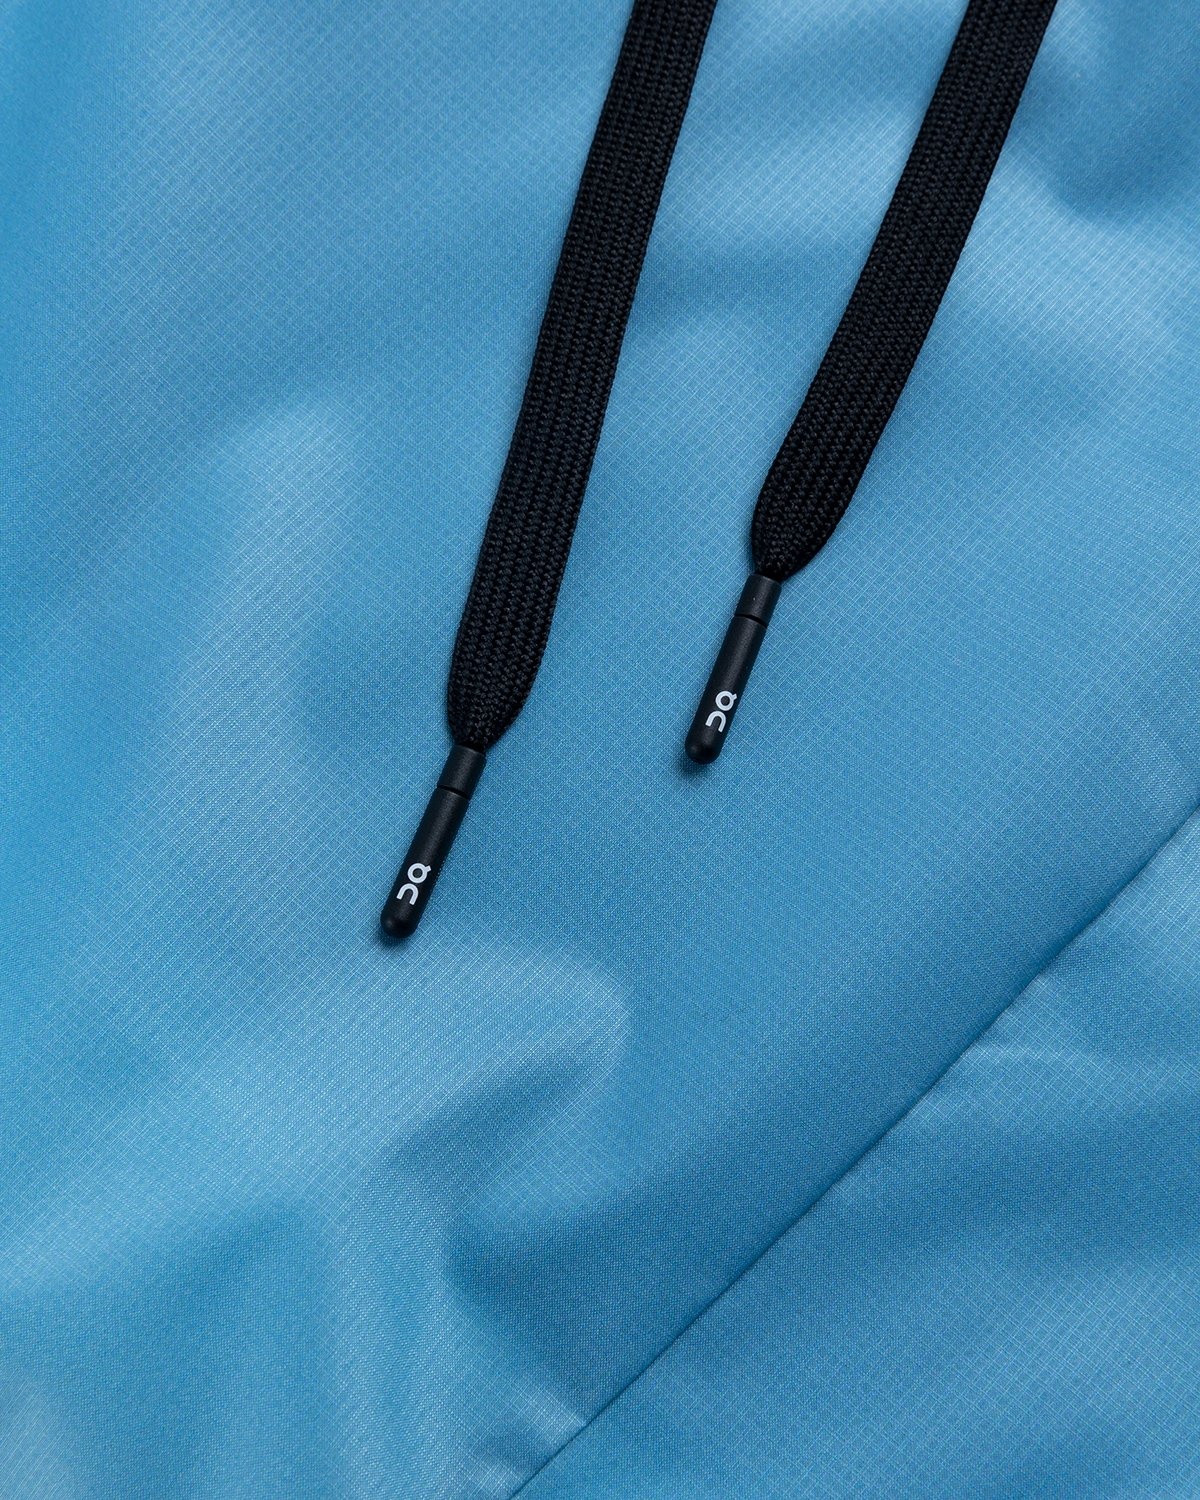 Loewe x On – Men's Technical Running Pants Gradient Grey - Pants - Blue - Image 6